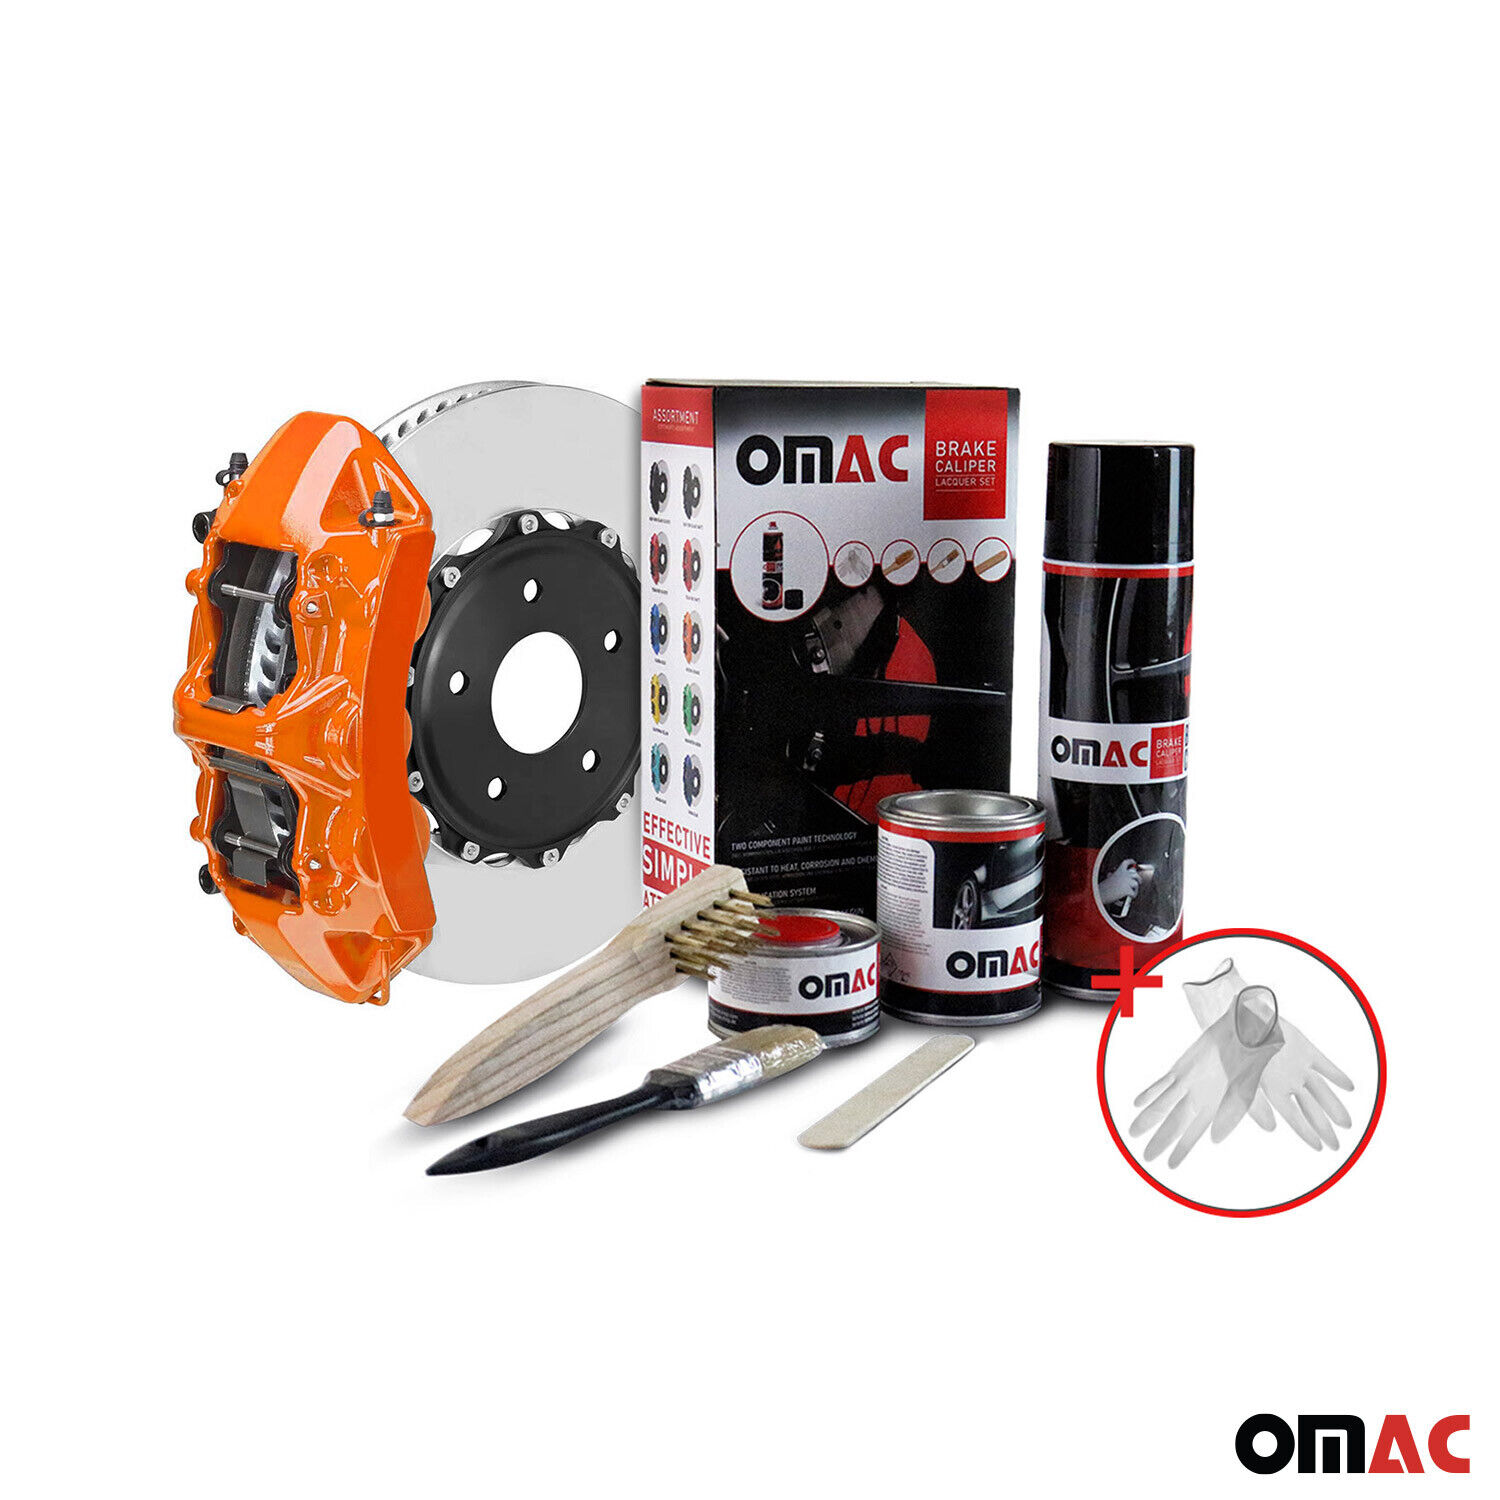 OMAC Brake Caliper Paint Epoxy Based Car Kit Orange Glossy High-Temperature